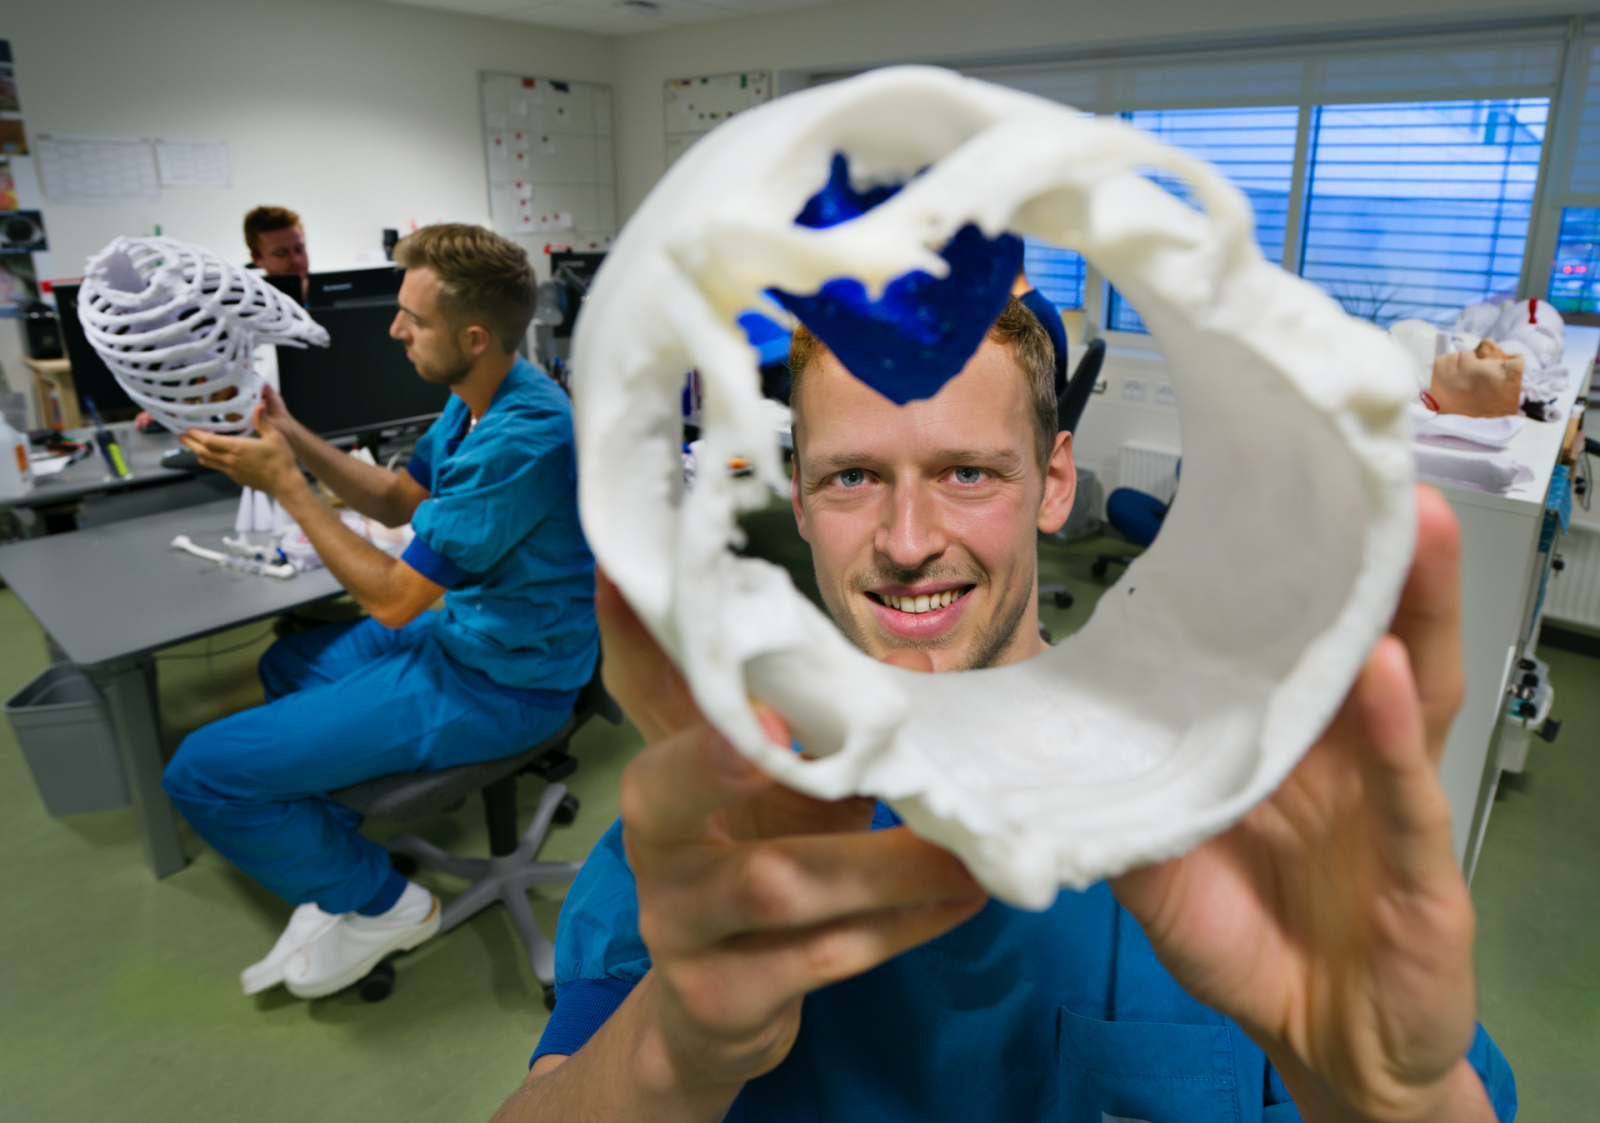 evaluerbare Forbyde Reparation mulig Aarhus University Hospital has opened af 3D printing centre – Health  Innovation Aarhus